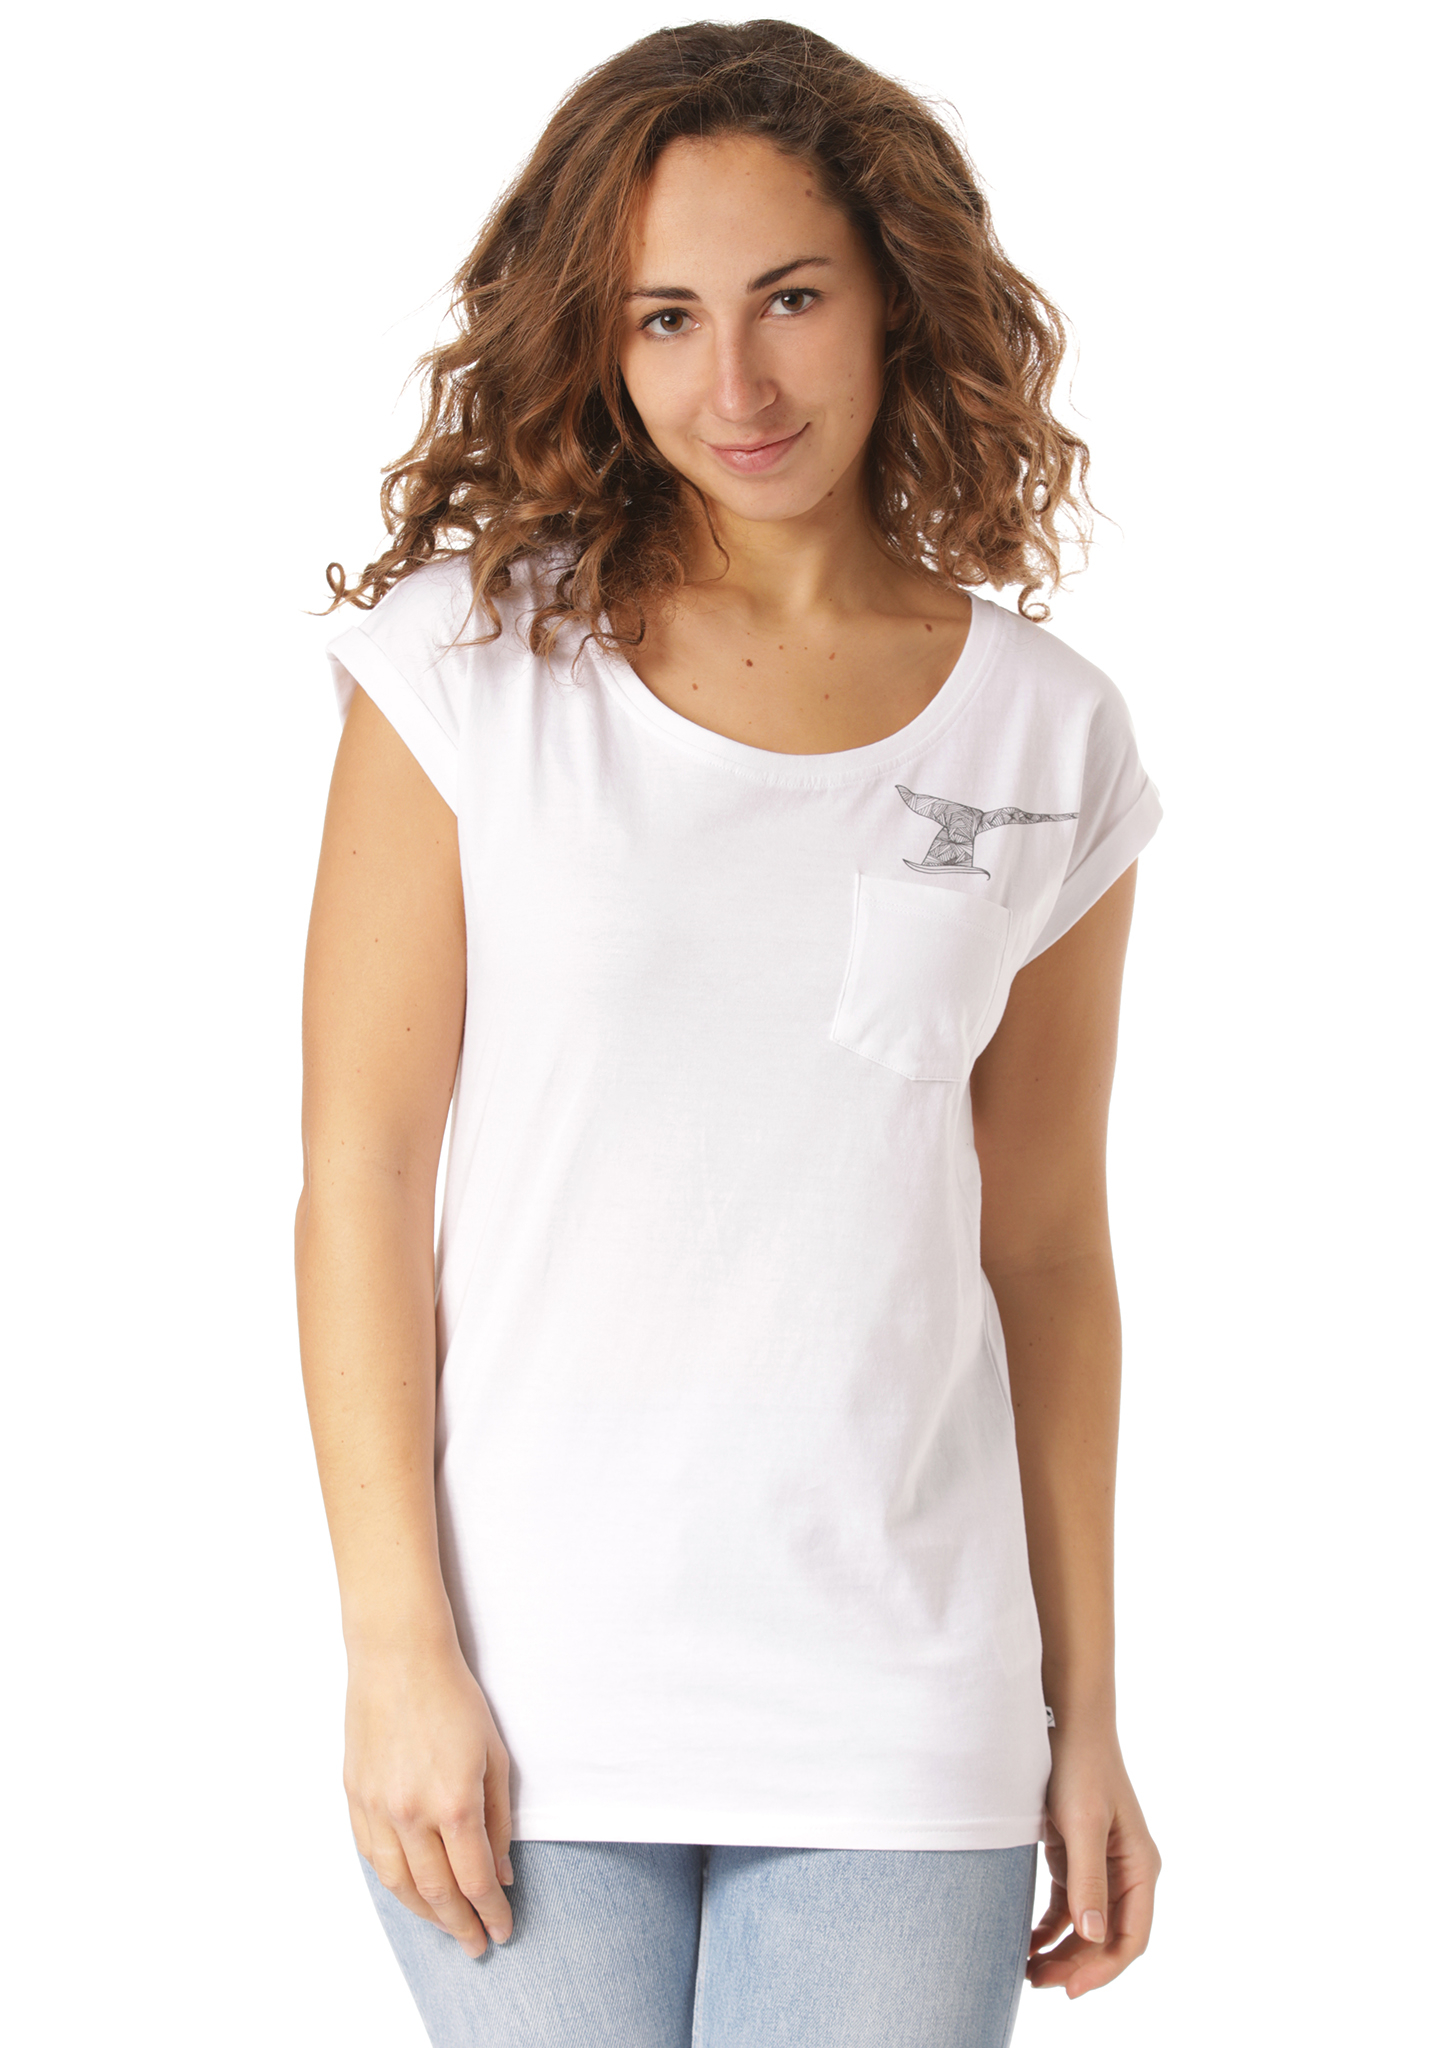 Lakeville Mountain Sena T-Shirt white XL